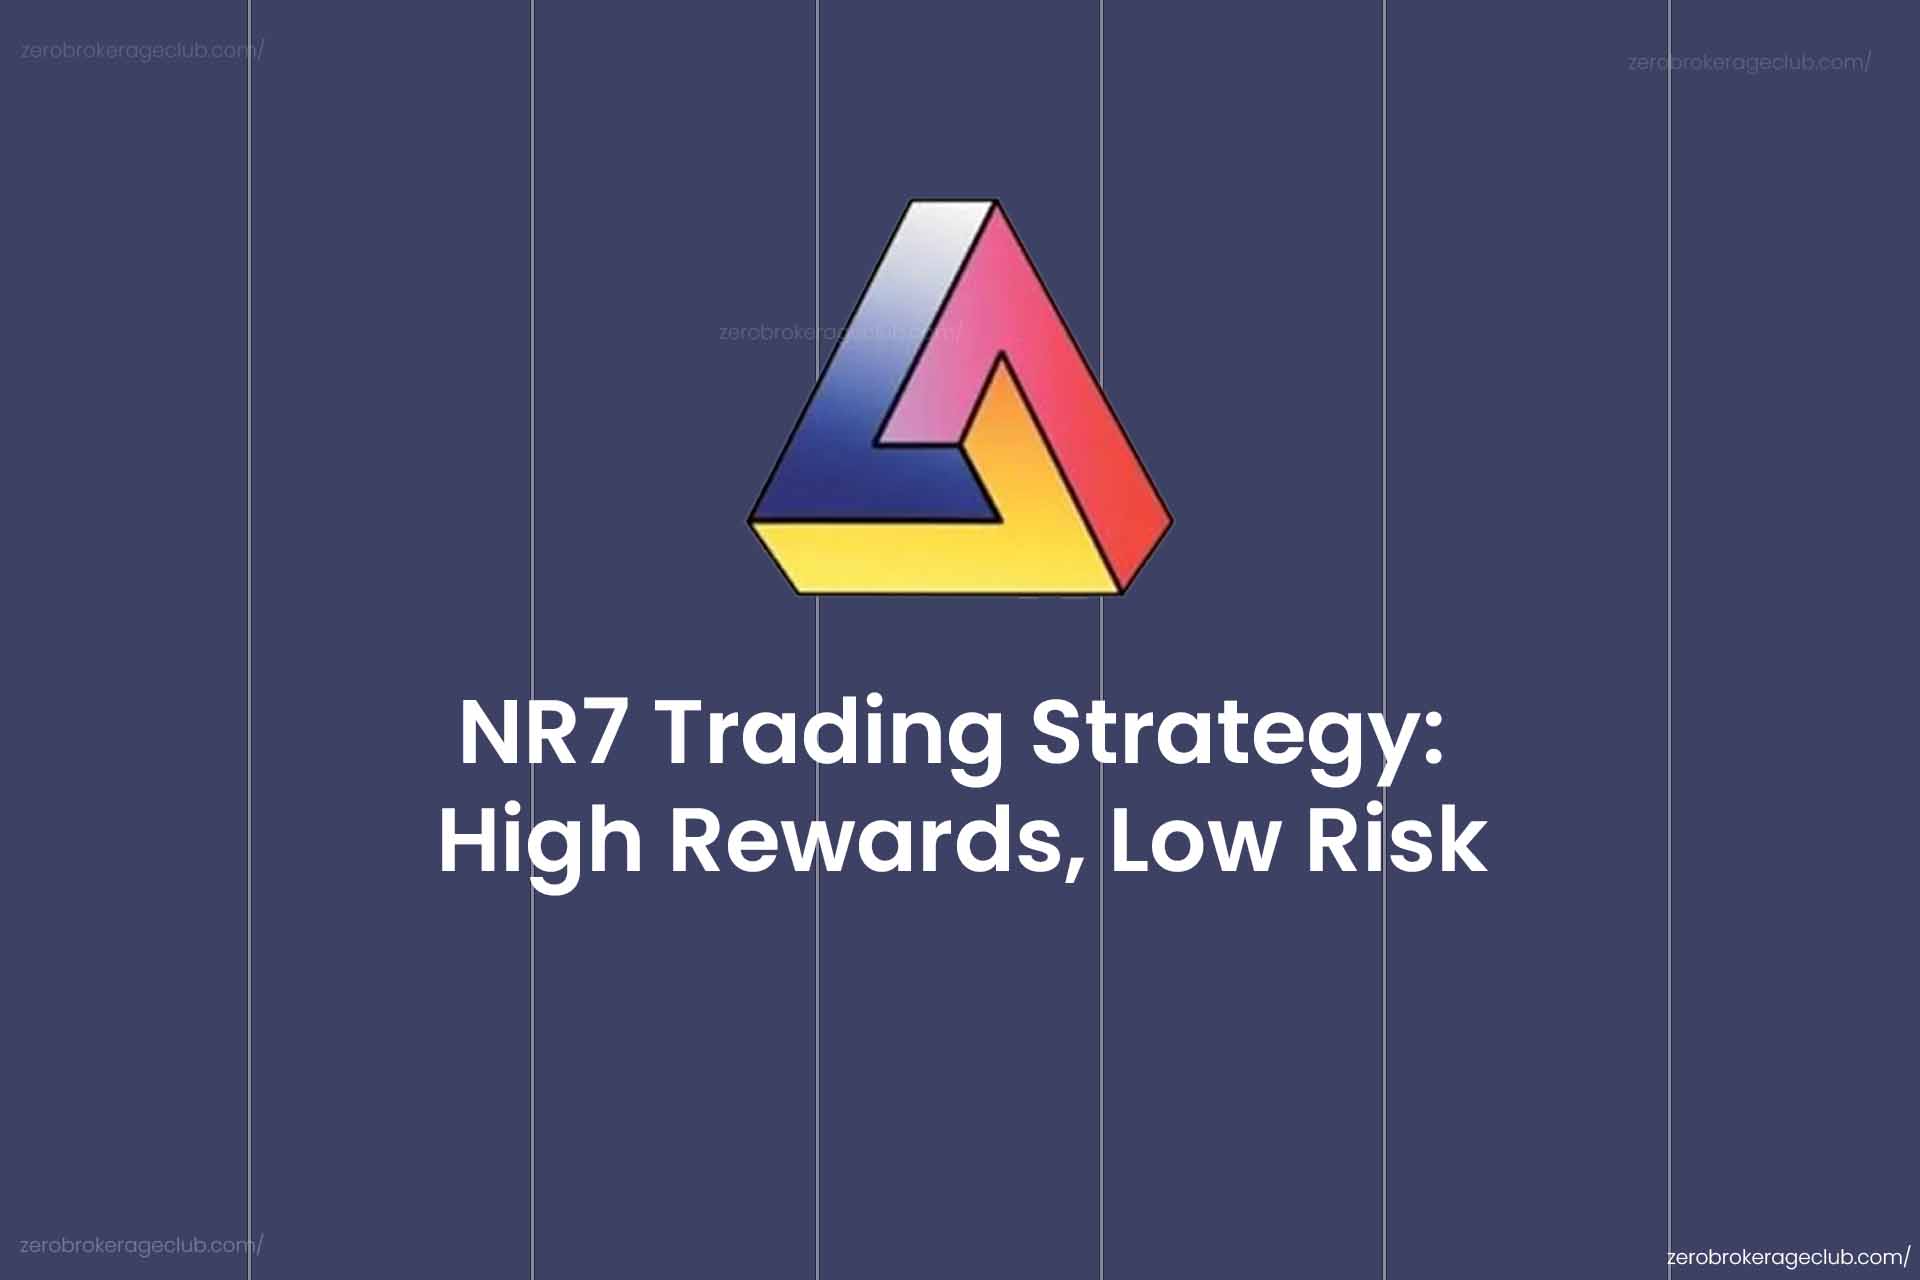 NR7 Trading Strategy: High Rewards, Low Risk